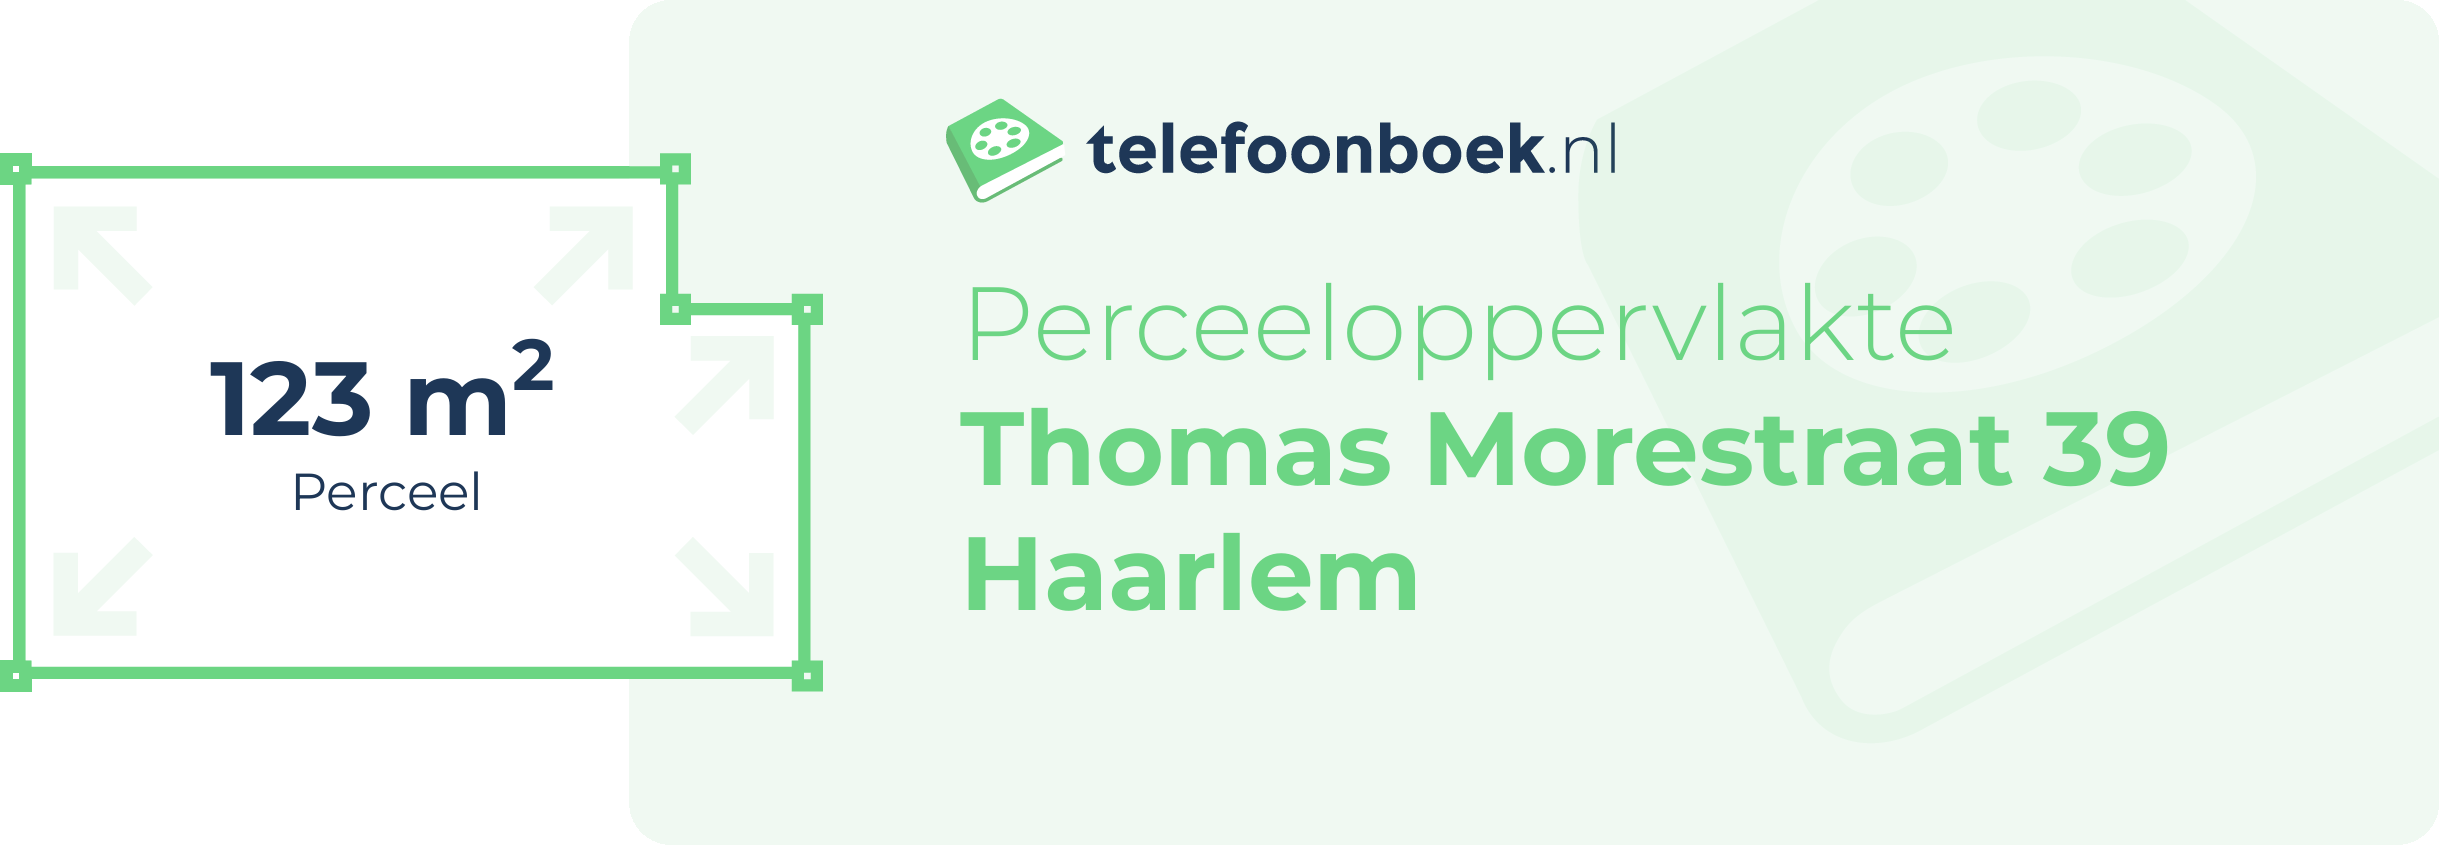 Perceeloppervlakte Thomas Morestraat 39 Haarlem